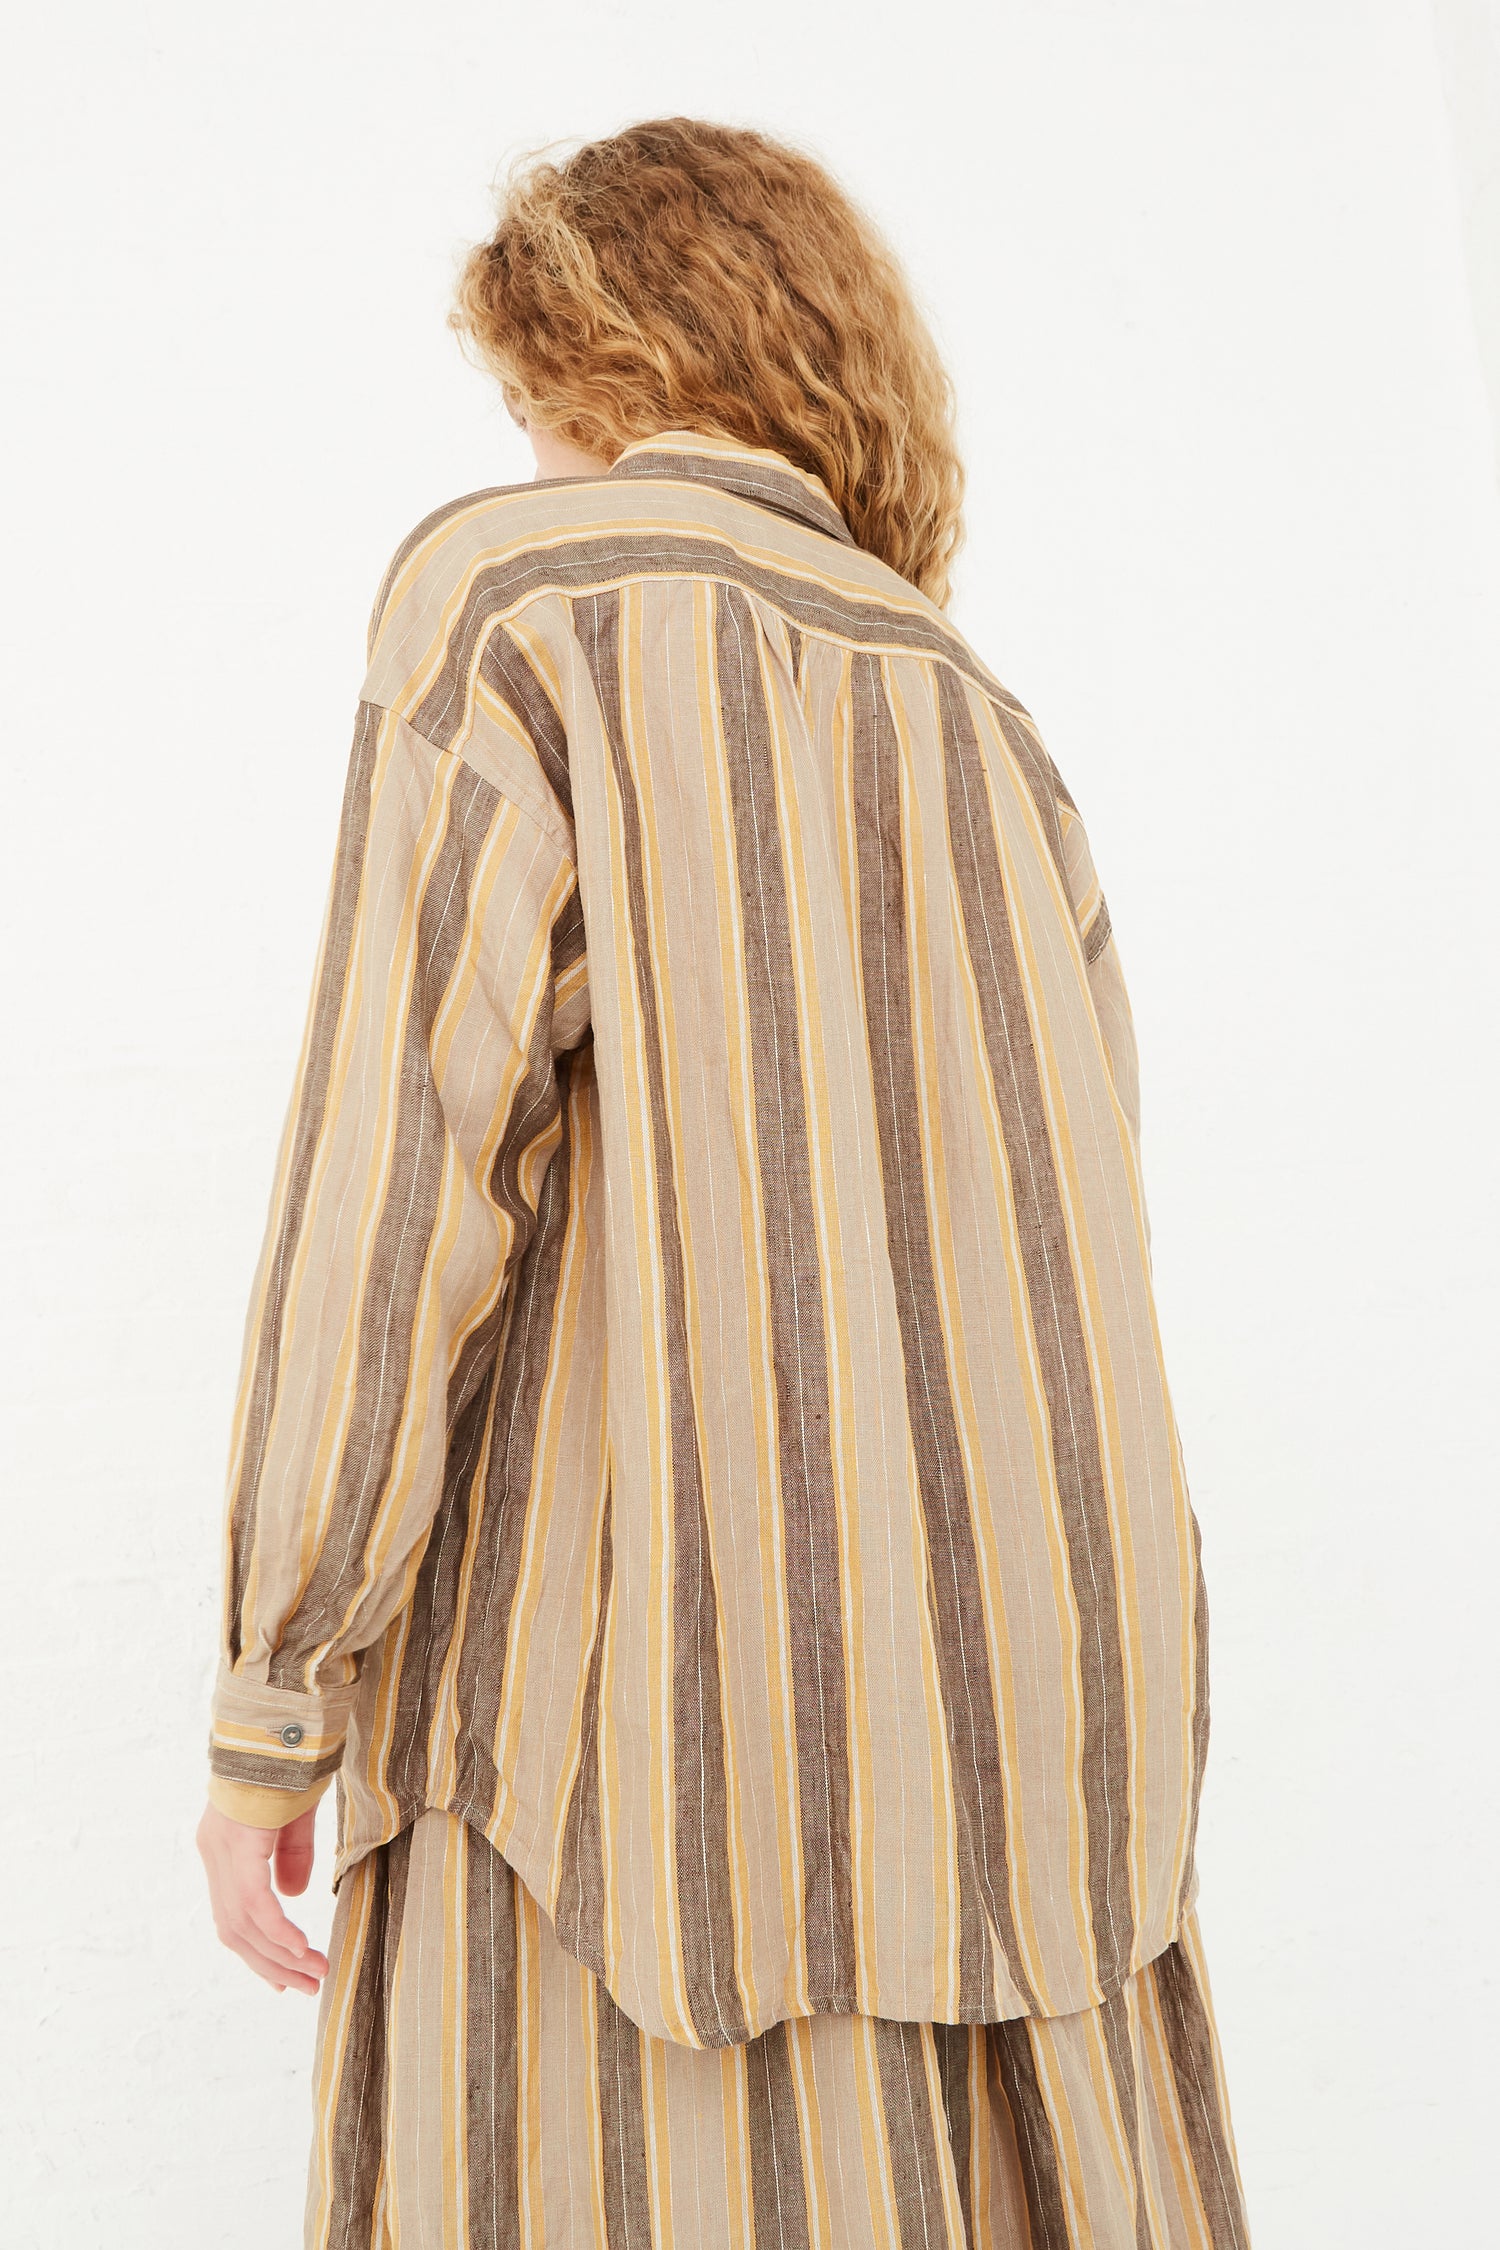 The back view of a woman wearing an Ichi Antiquités Linen Stripe Shirt in Mustard.